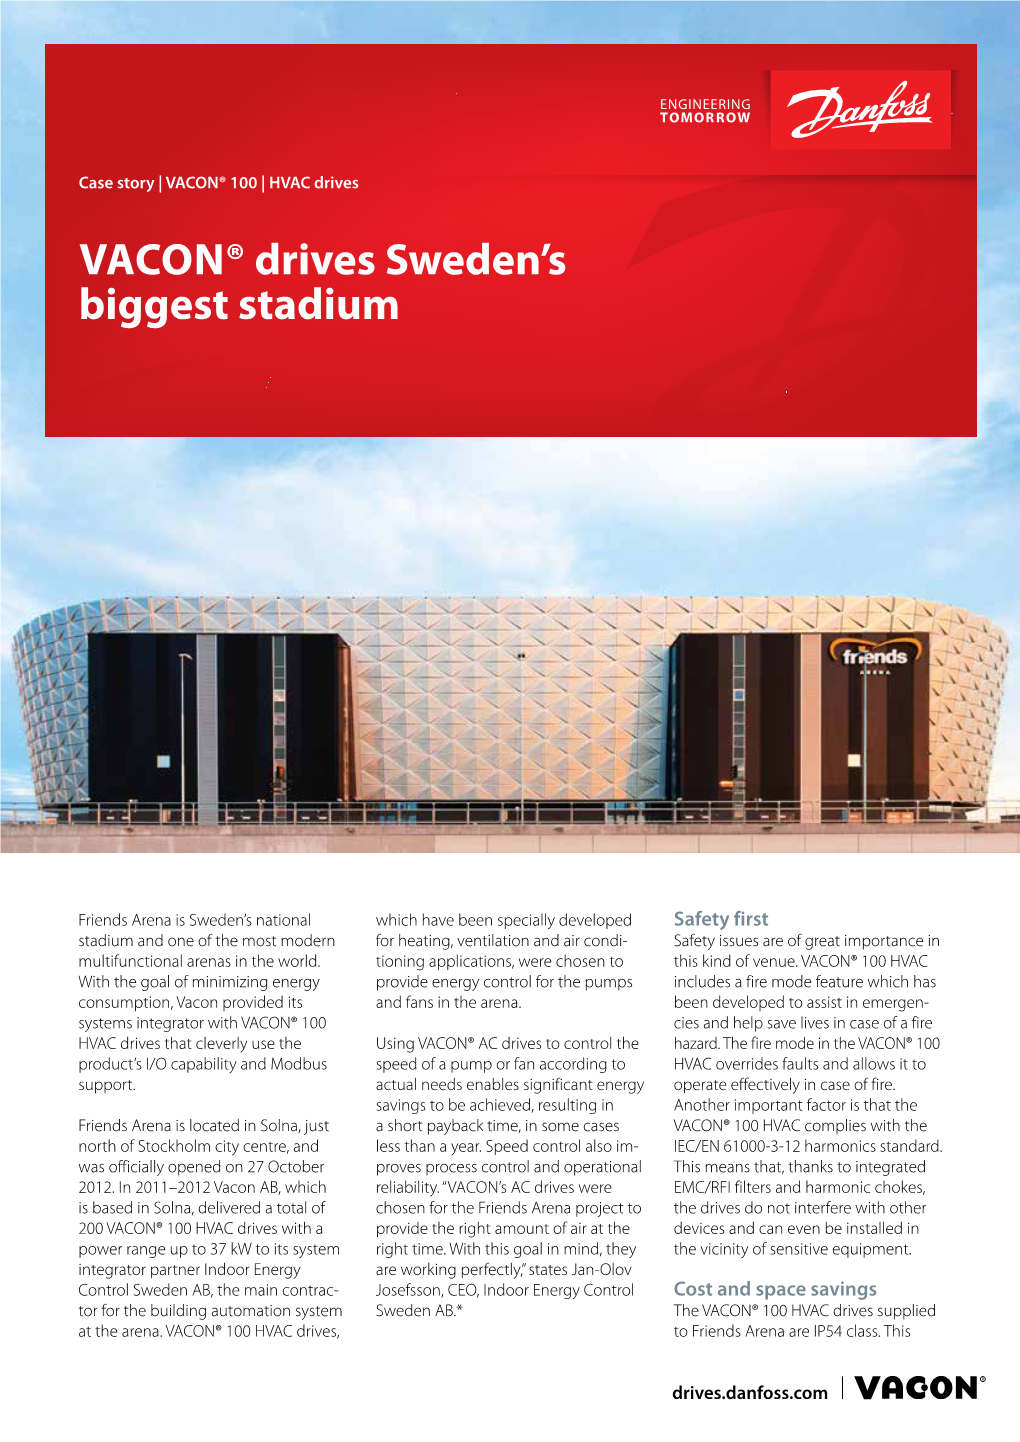 VACON® Drives Sweden's Biggest Stadium